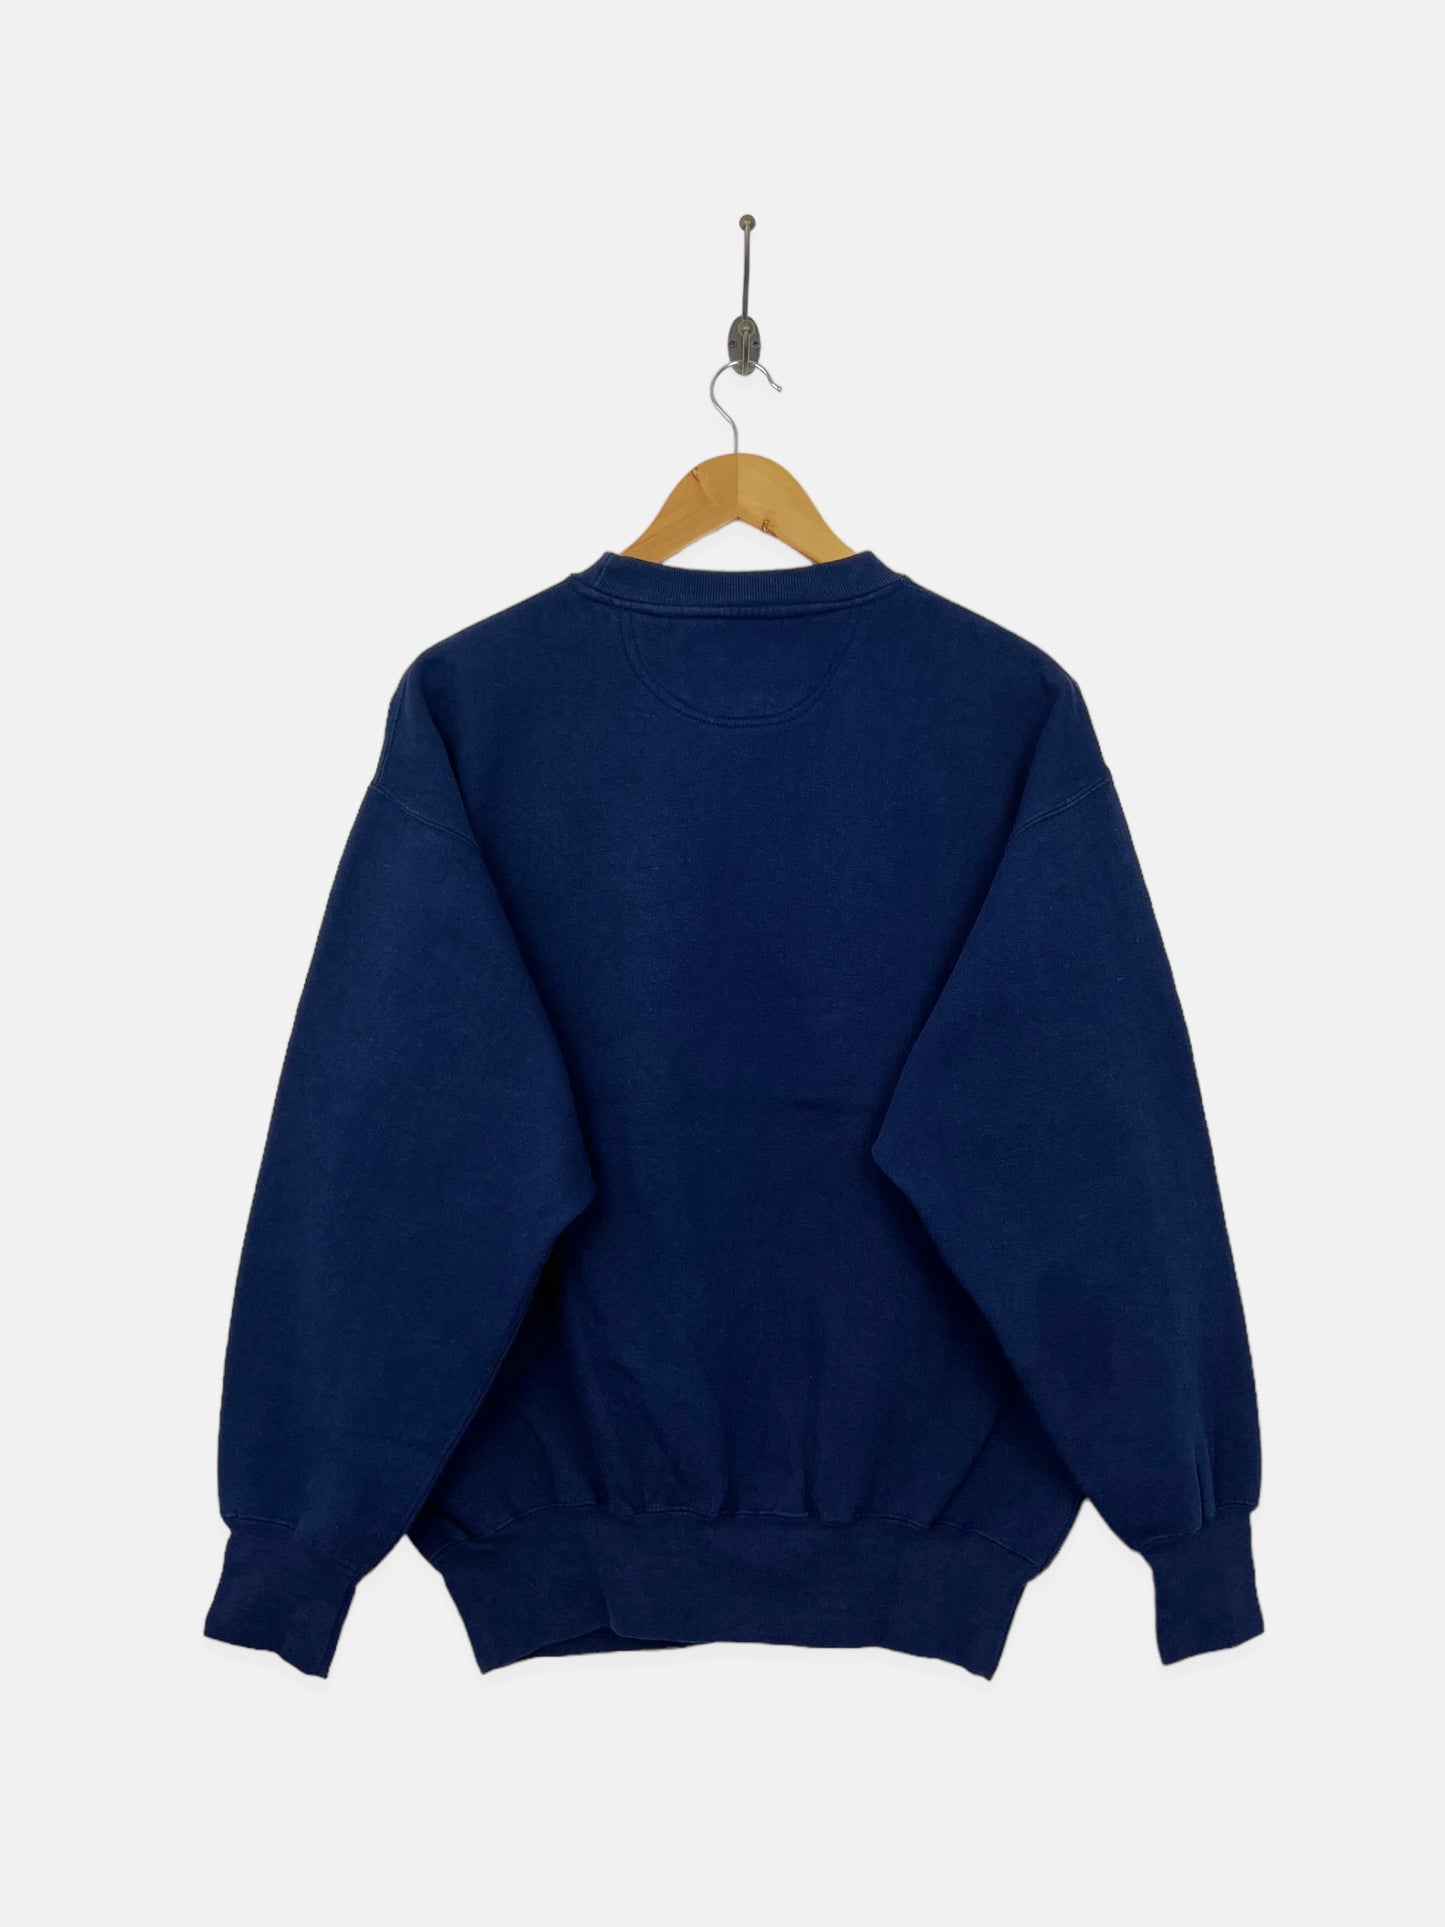 90's Notre Dame University Embroidered Vintage Sweatshirt Size 12